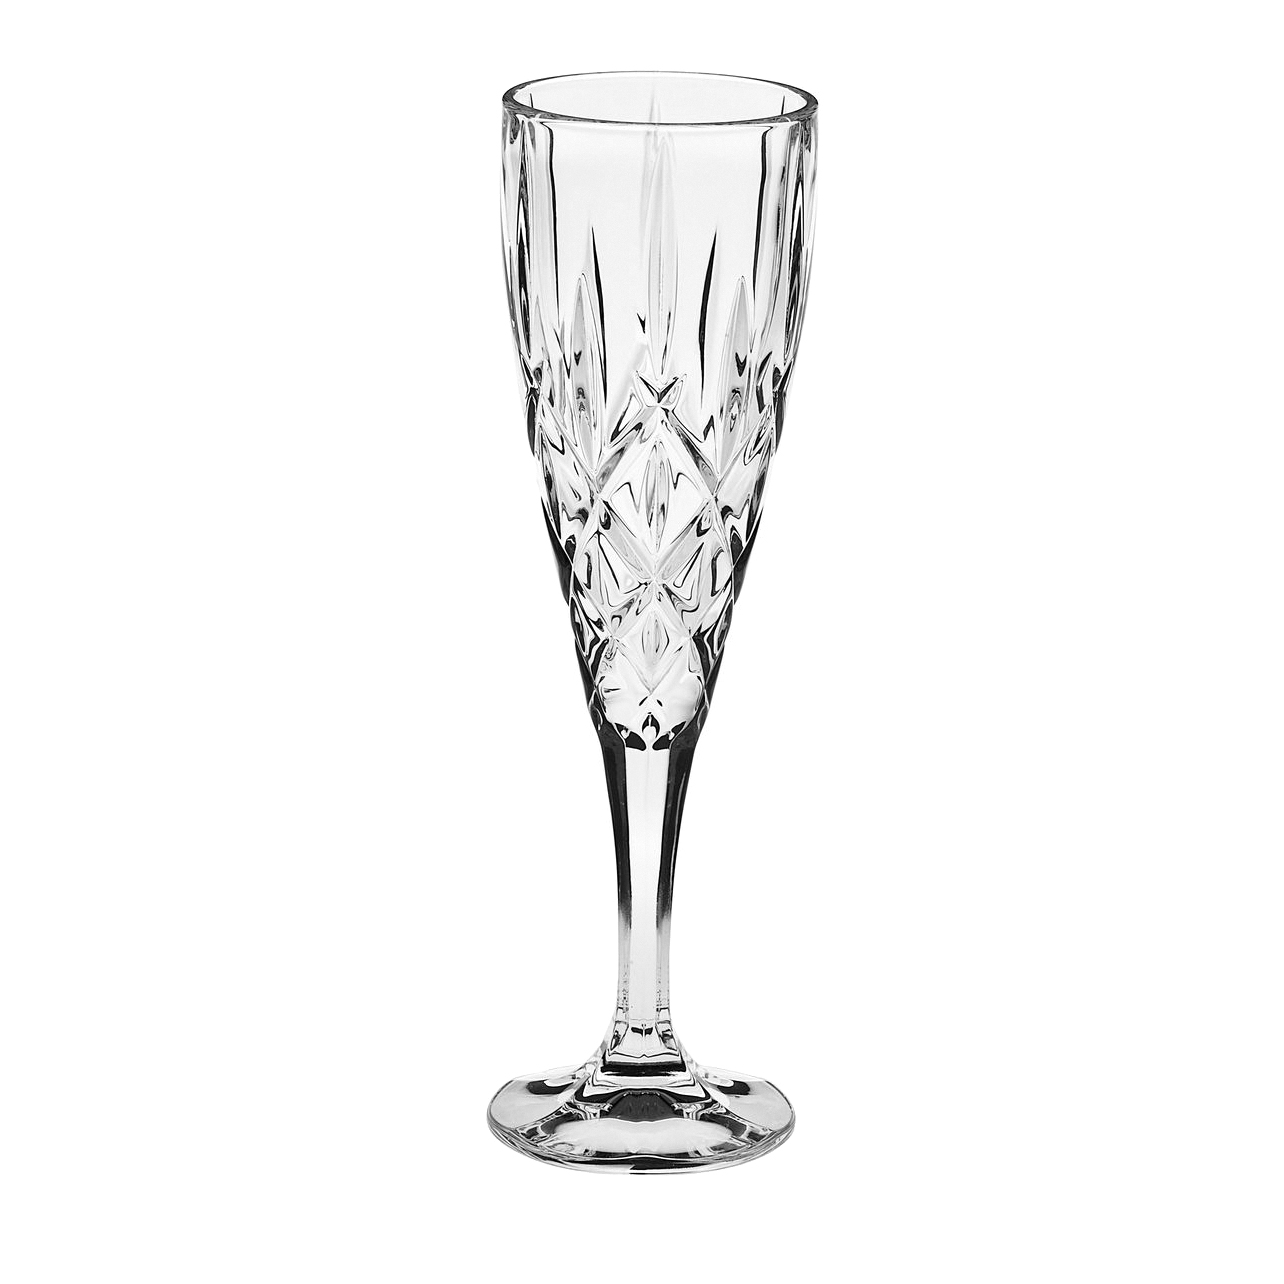 Набор фужеров для шампанского Crystal bohemia as 6х180мл (990/10900/0/52820/180-609) набор рюмок для бренди crystal bohemia sheffield 990 12014 0 52820 250 609